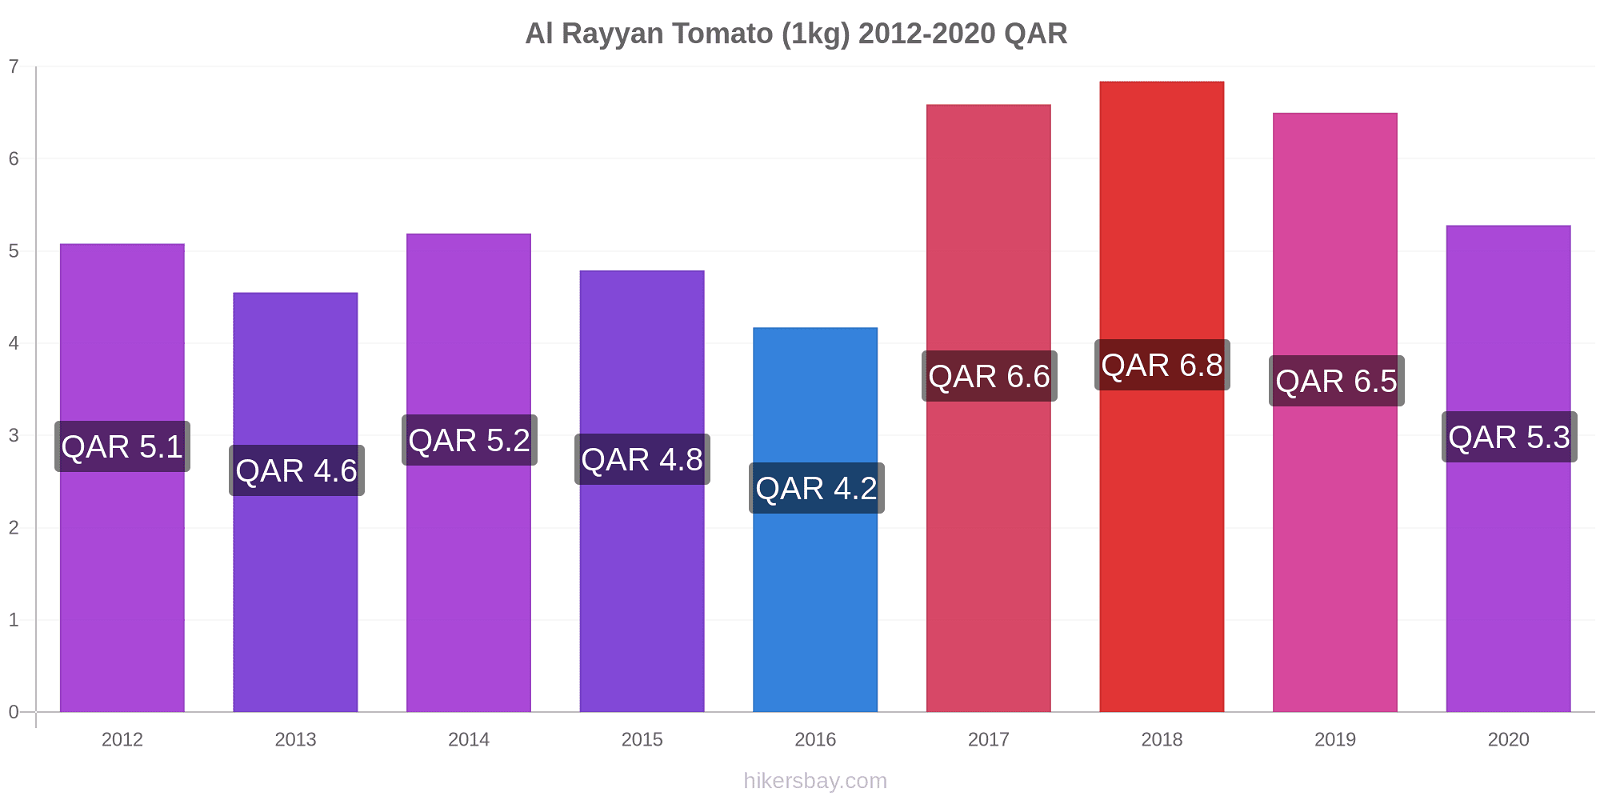 Al Rayyan price changes Tomato (1kg) hikersbay.com